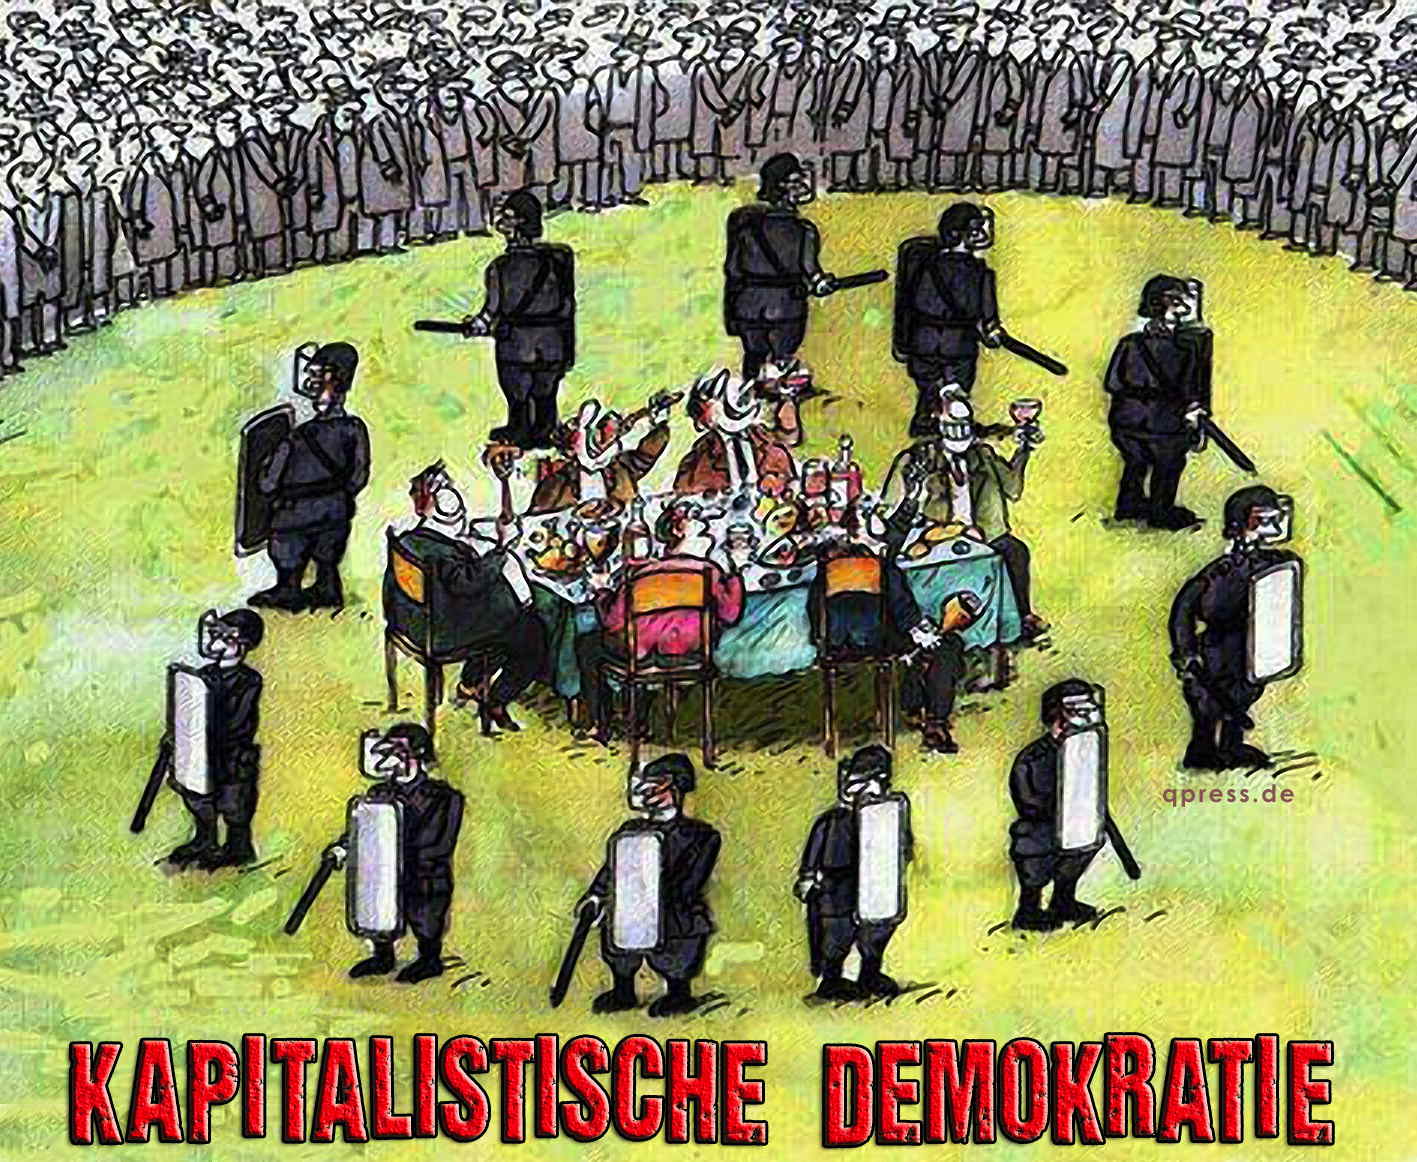 Kapitalistische marktkonforme Demokratie ueberwachung diktatur bespitzelung Ausforschung regierungskriminalitaet qpress